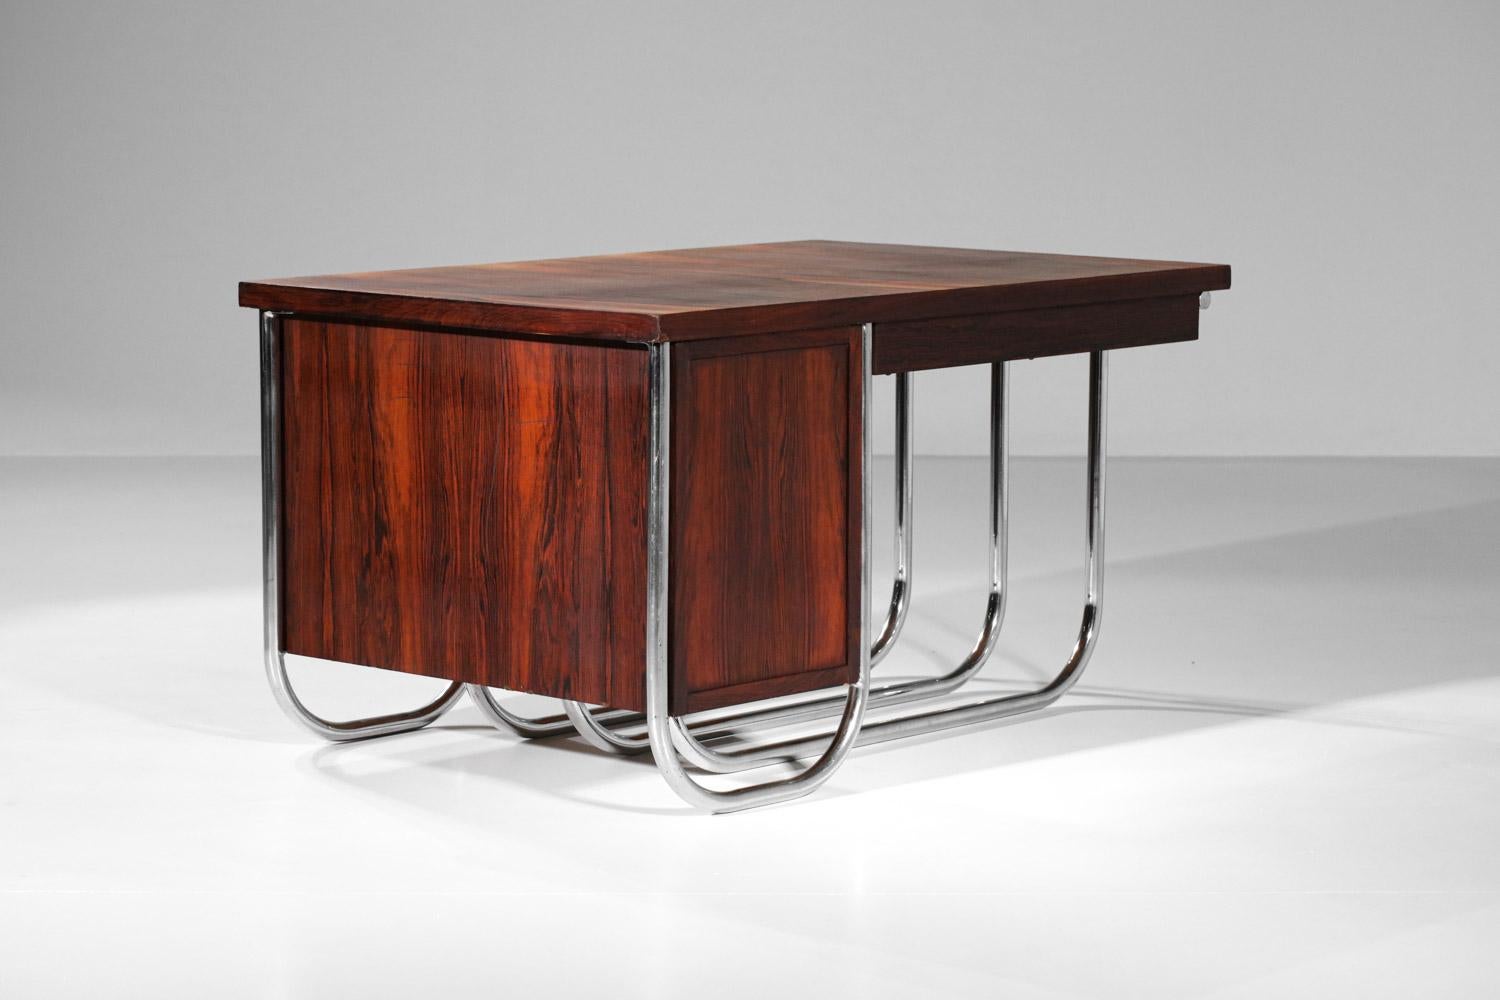 Modernist Desk in Solid Wood 40s / 50s Bauhaus Style Vintage For Sale 7